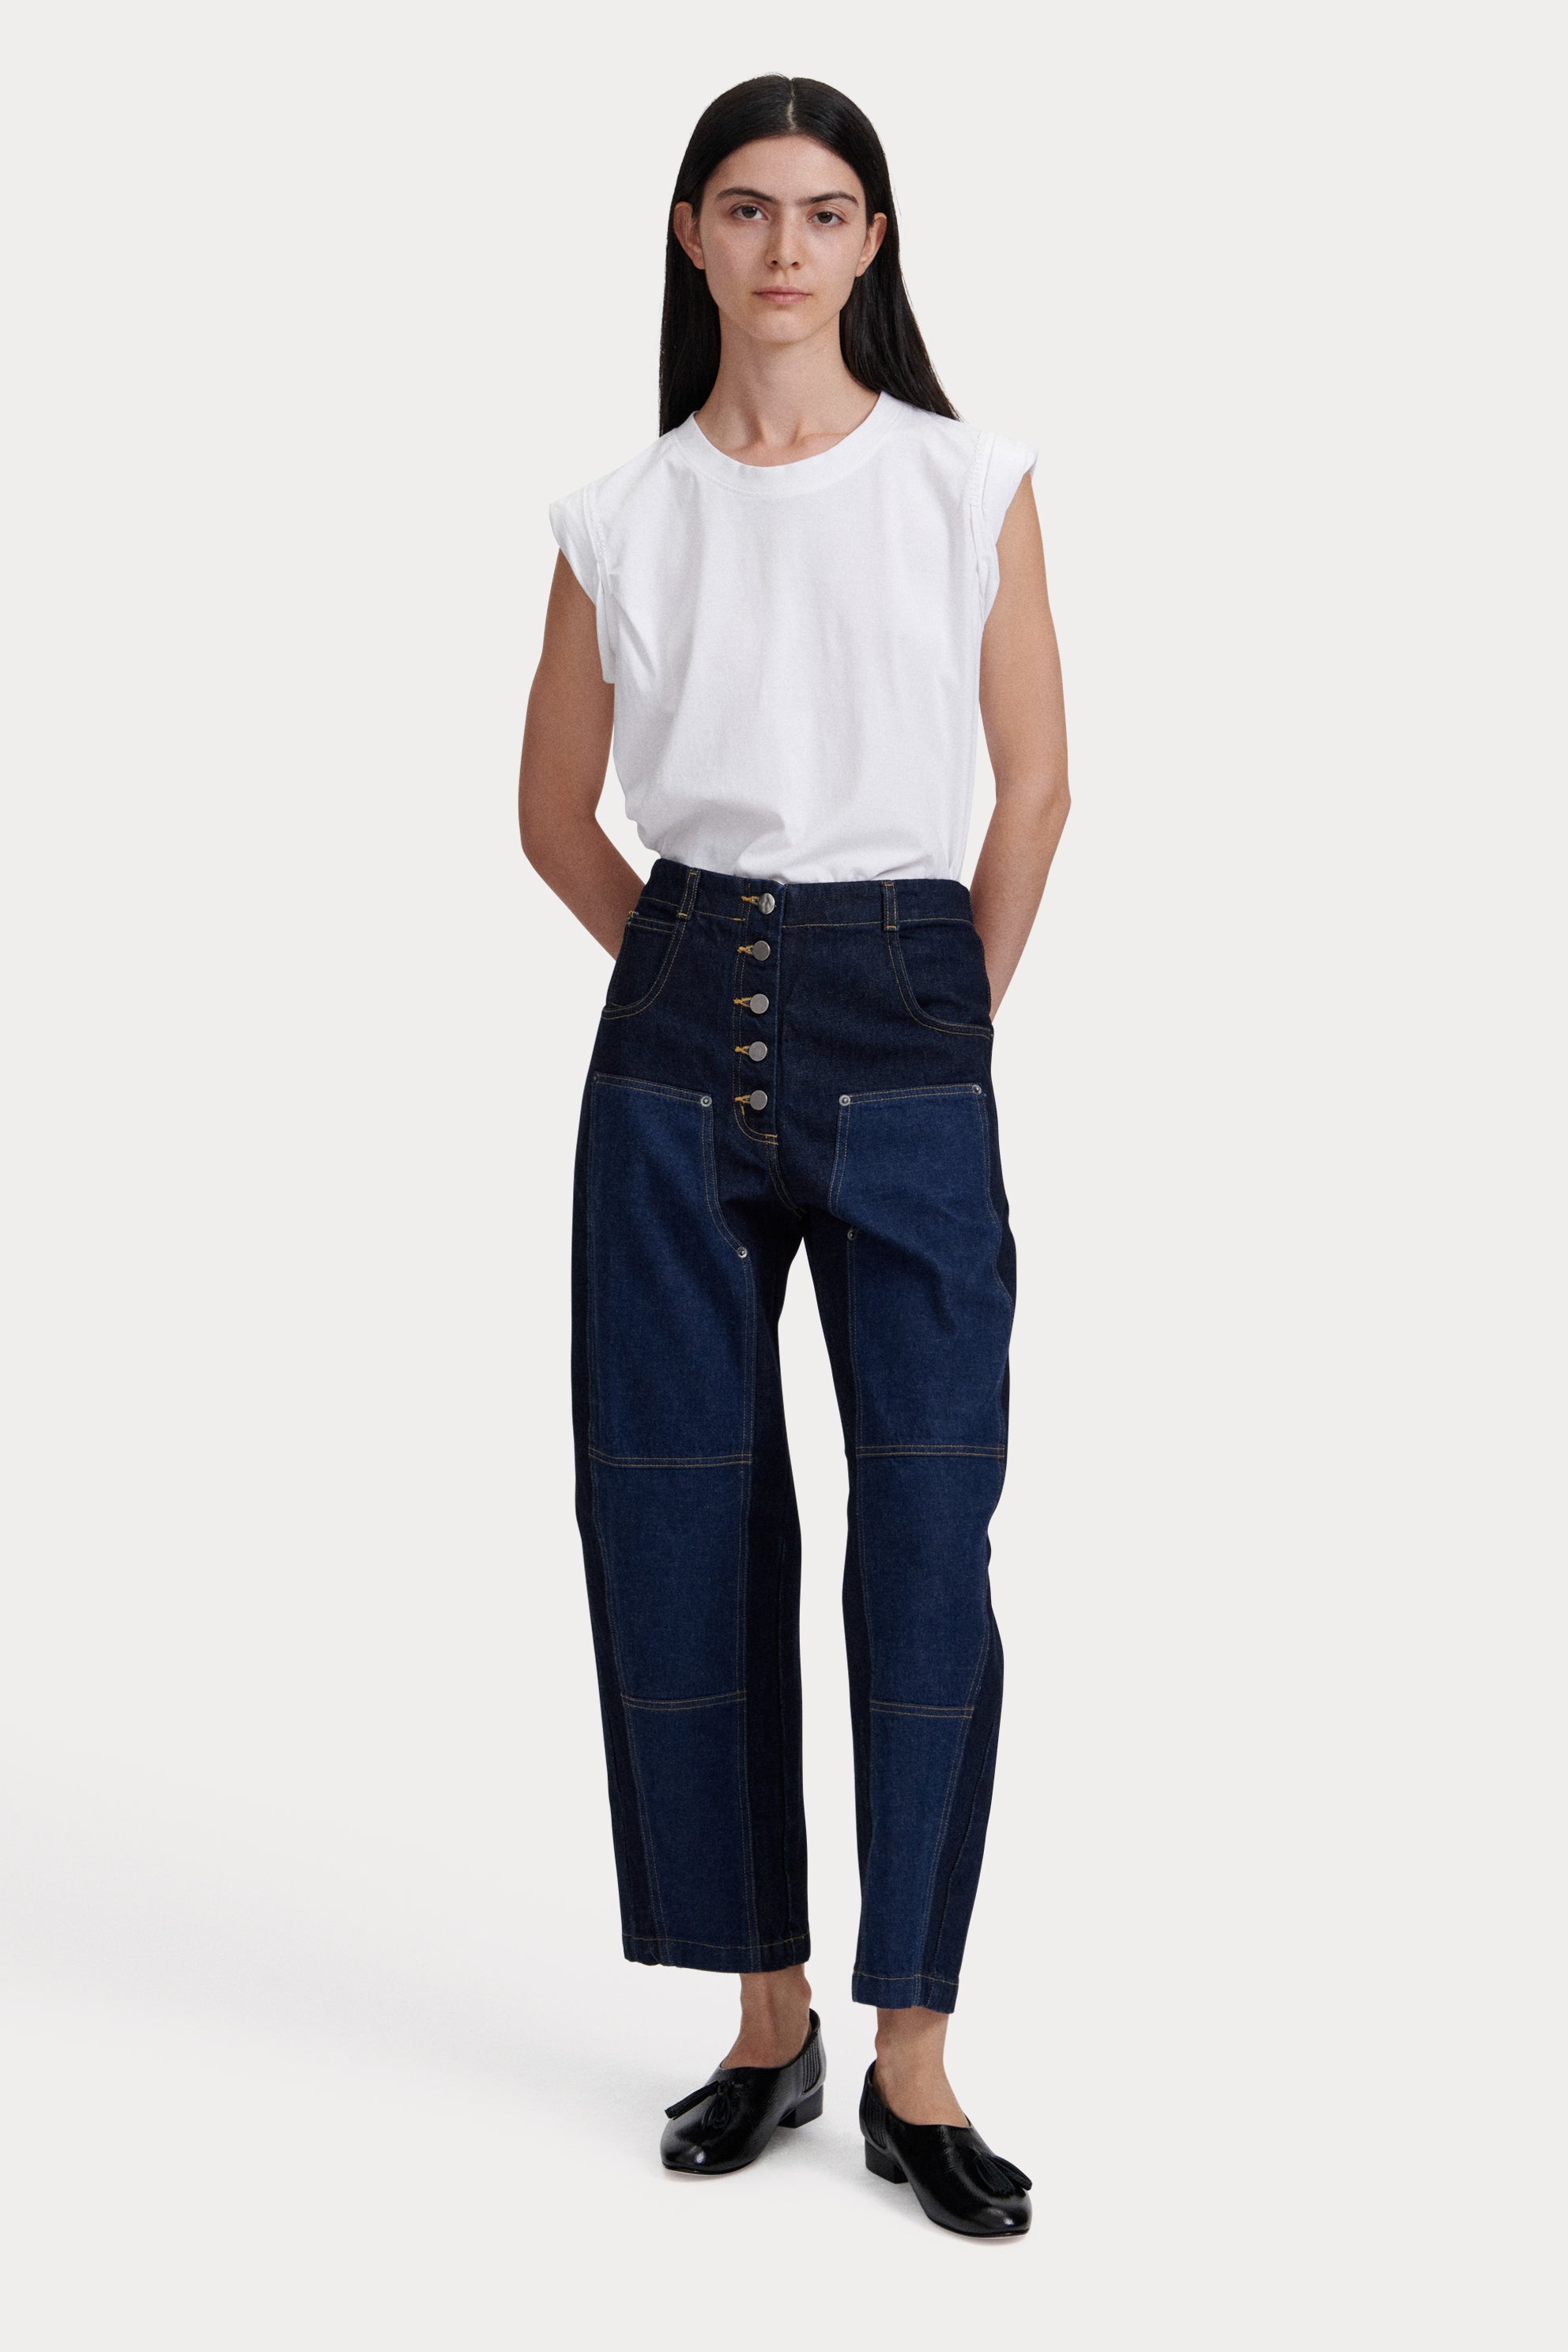 Denim and Jeans | Rachel Comey